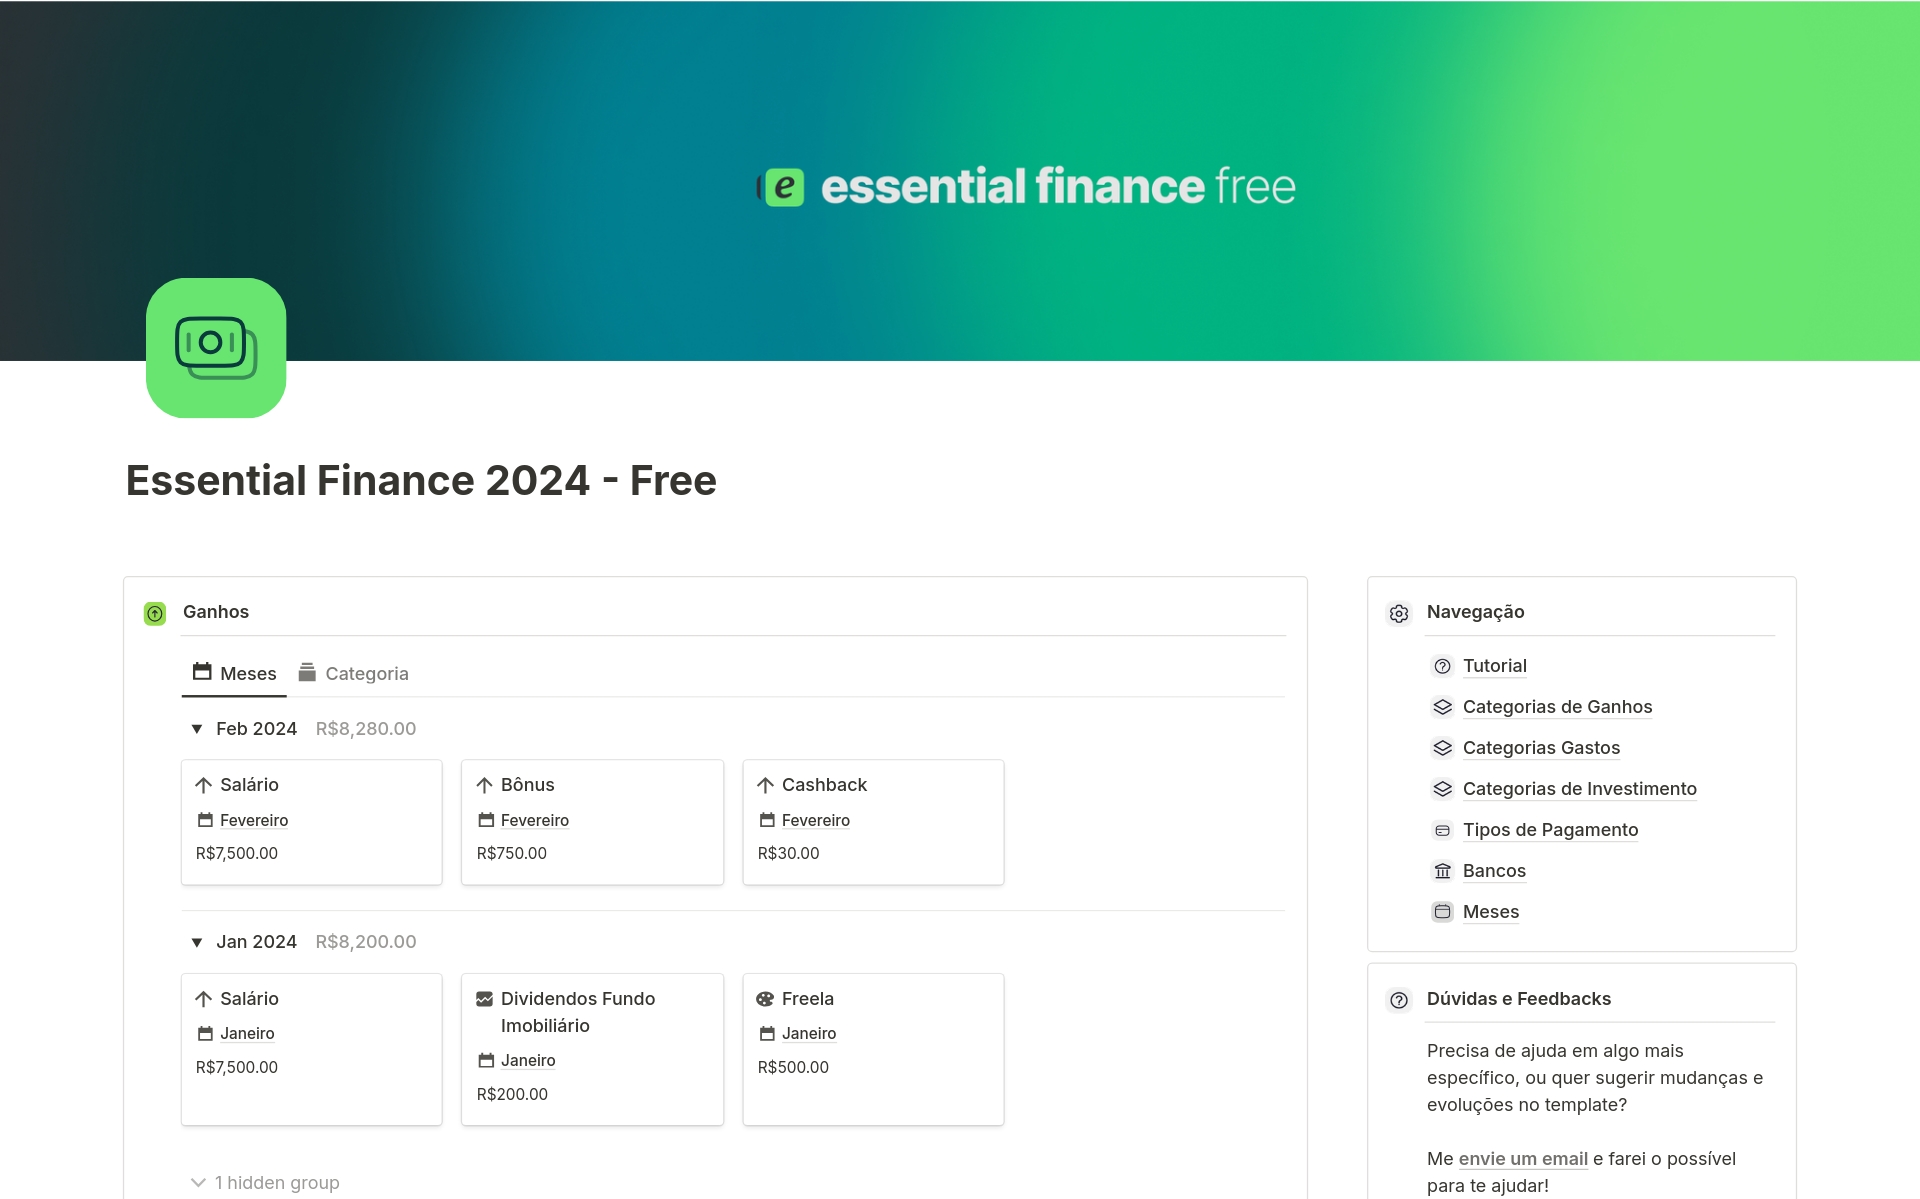 Essential Finance 2024 - Free님의 템플릿 미리보기